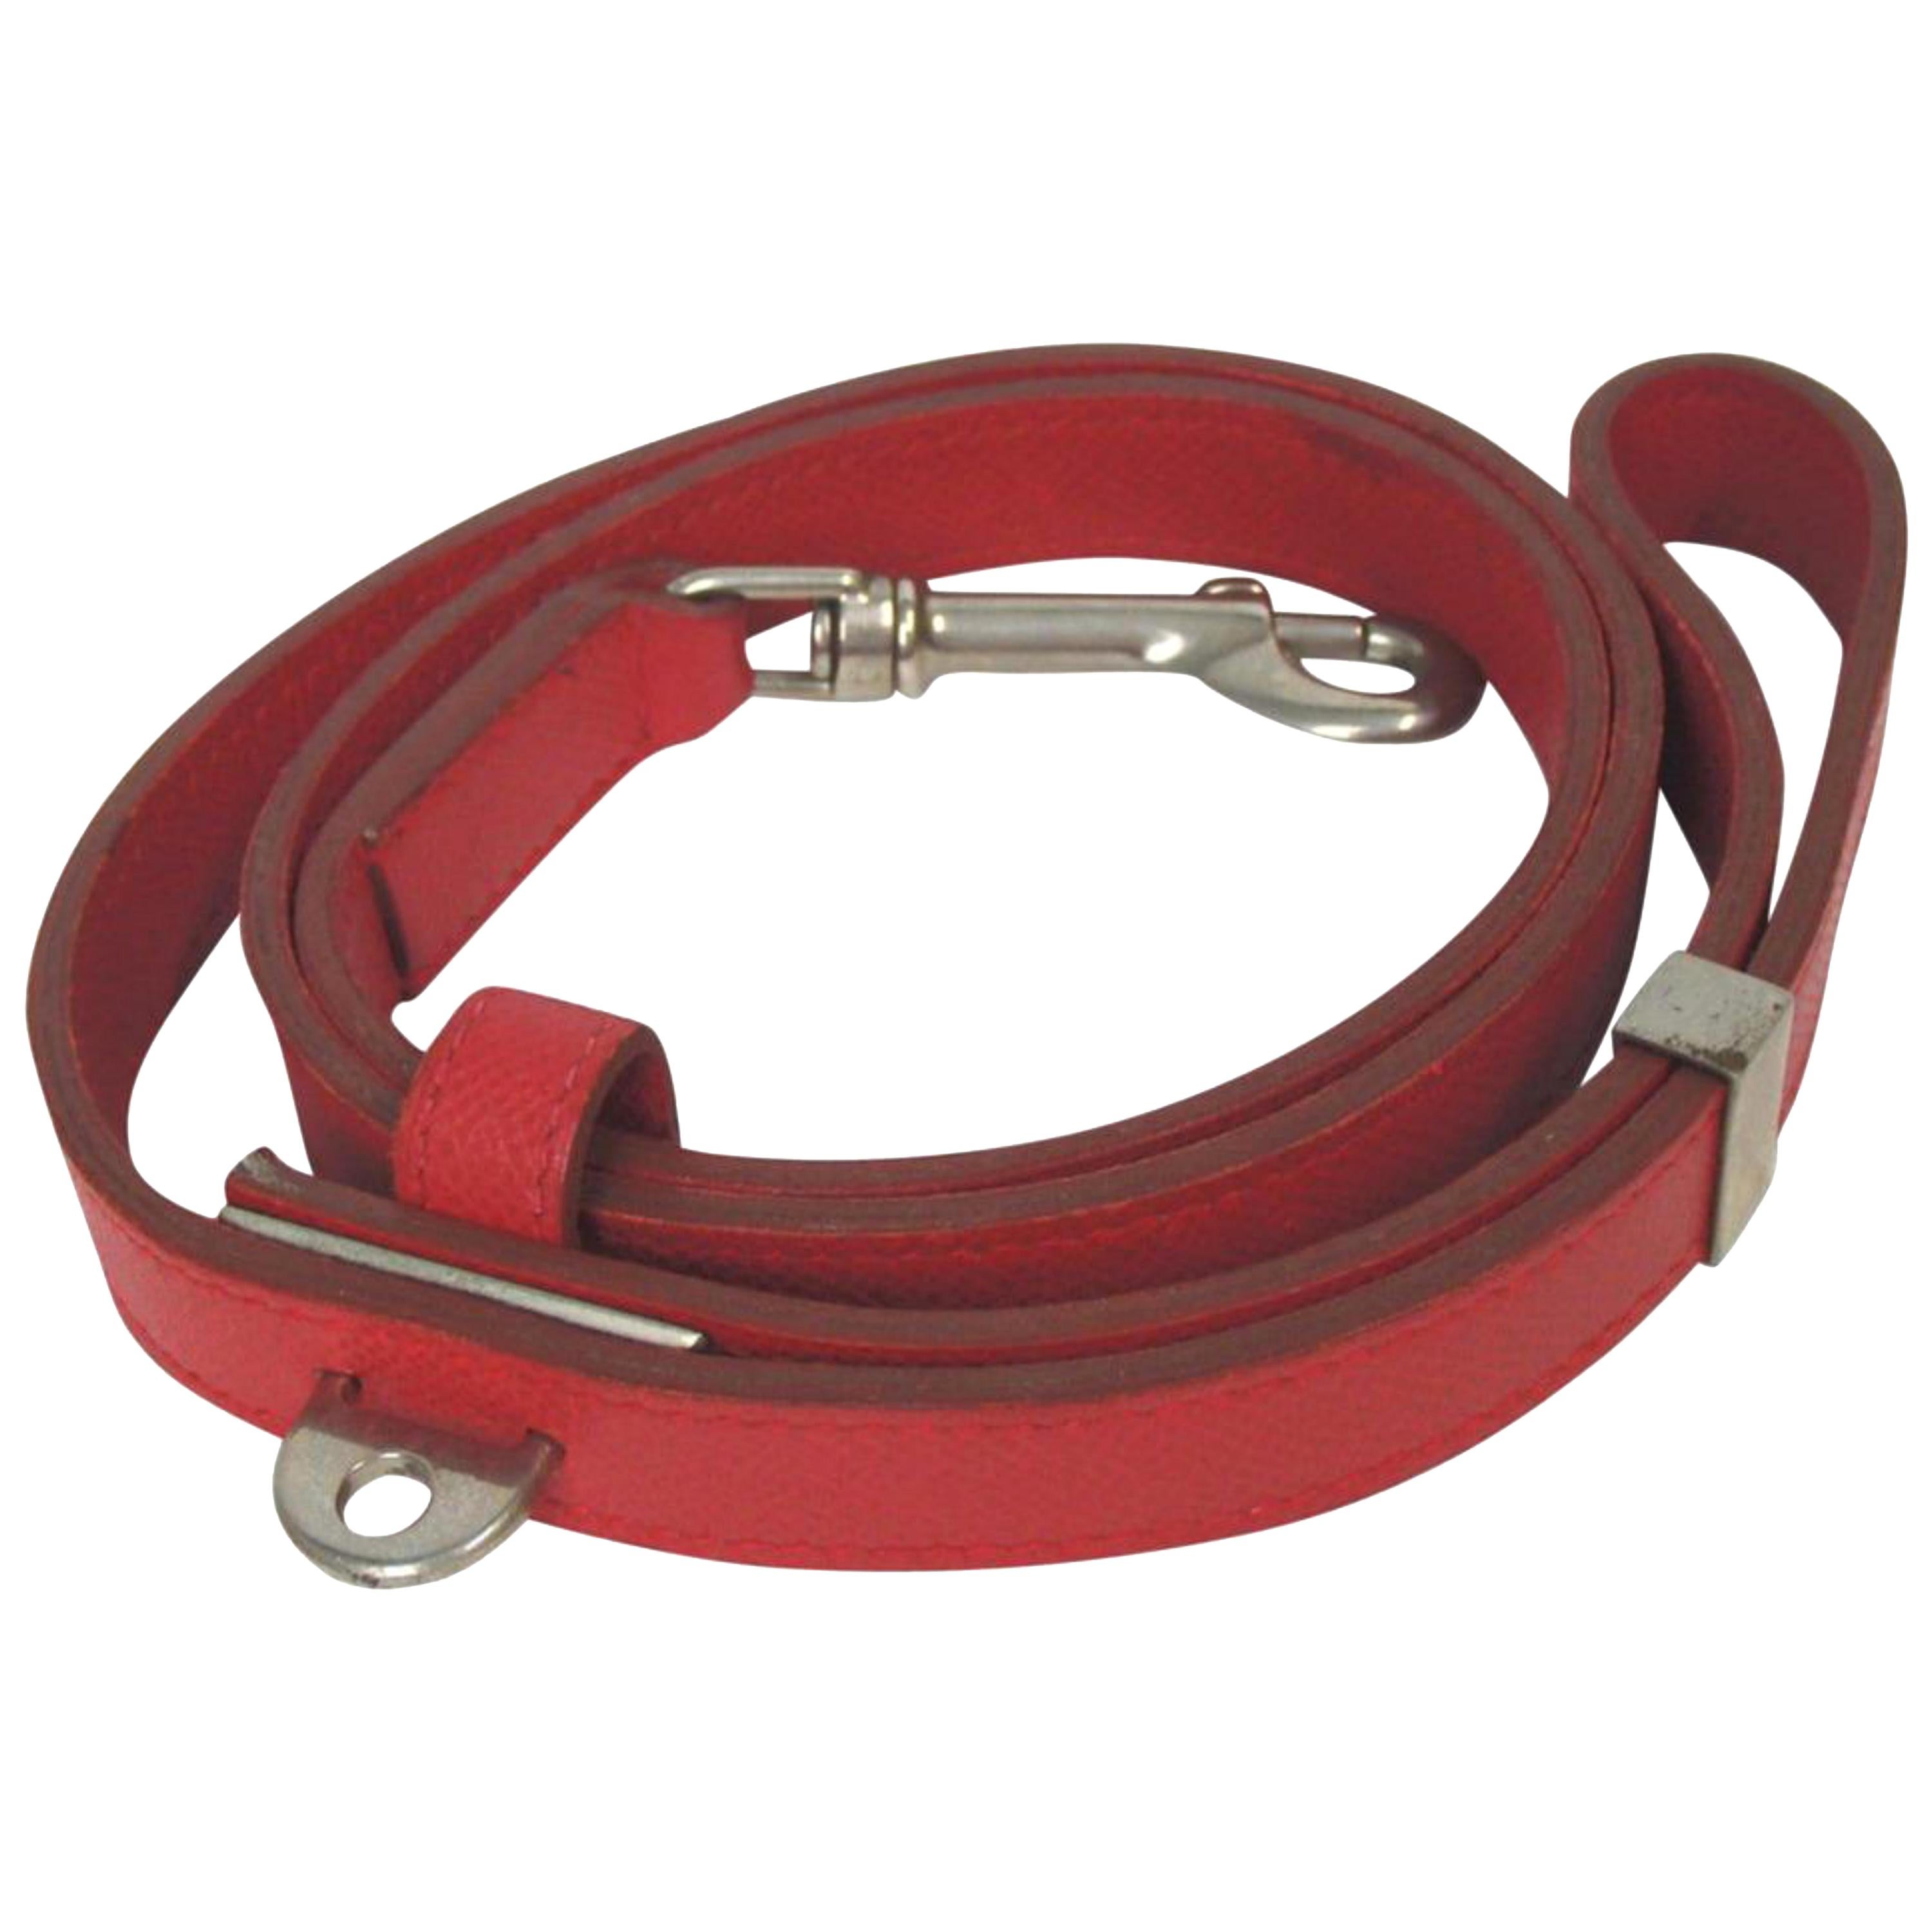 Hermes Dog Leash - 3 For Sale on 1stDibs | dog leash prices 